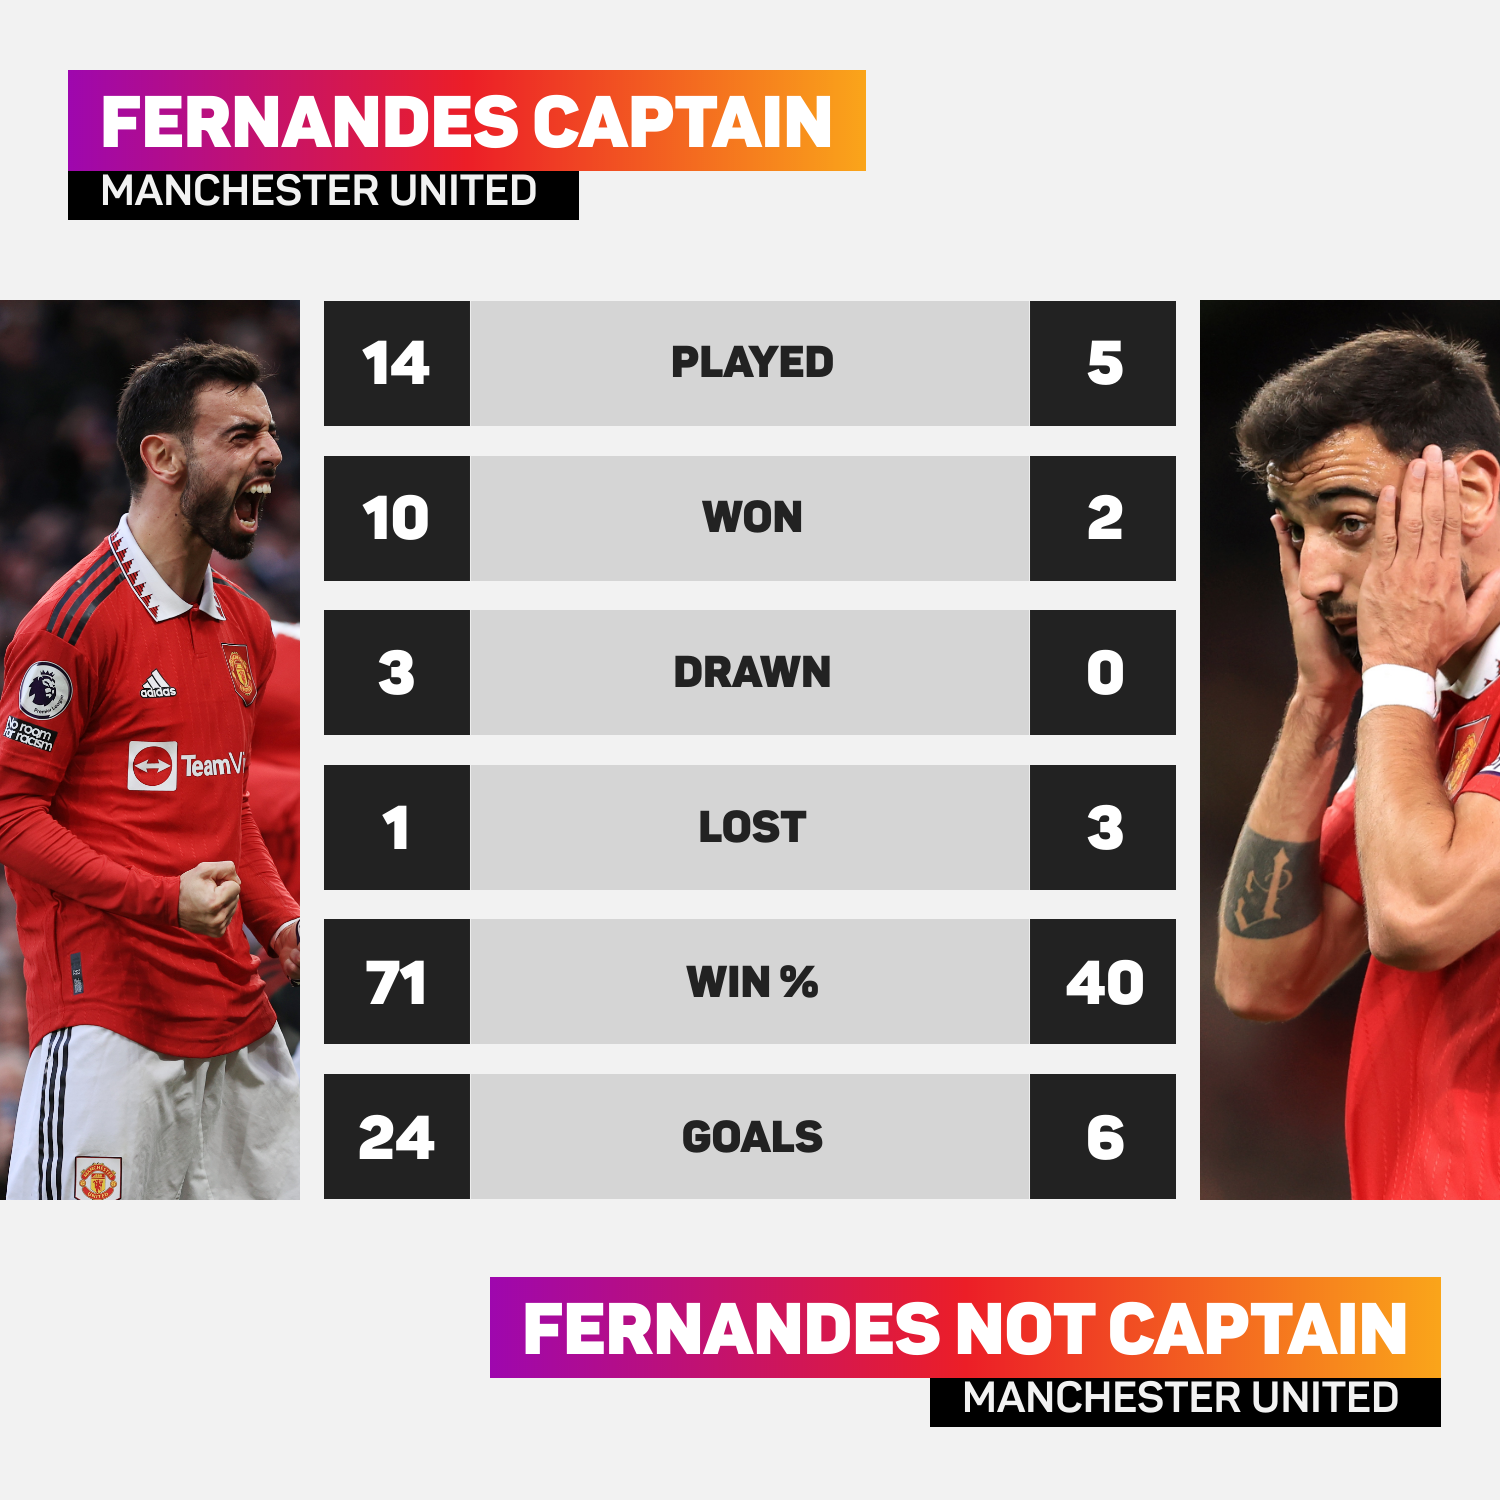 Fernandes captain